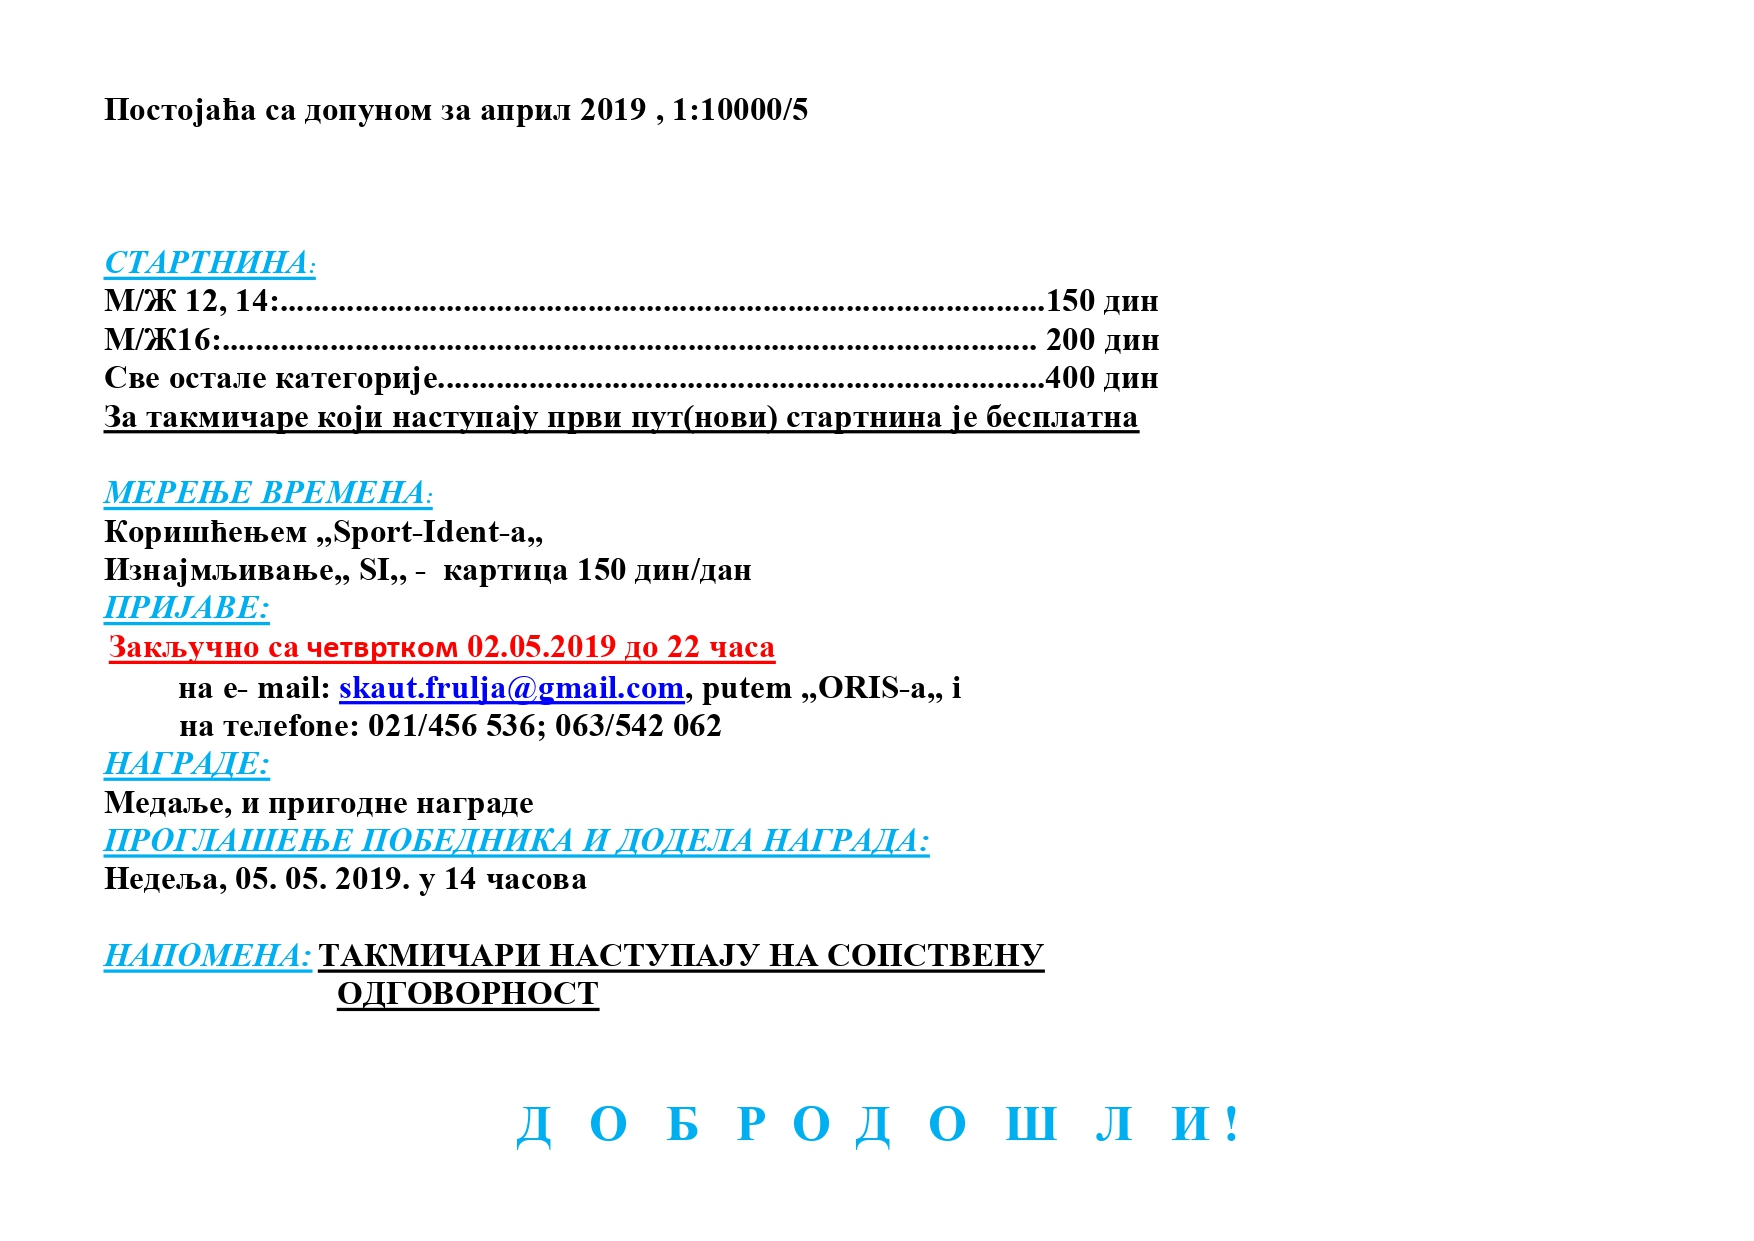 Трофеј Новог Сада 2019 Билтен 1. page 0003